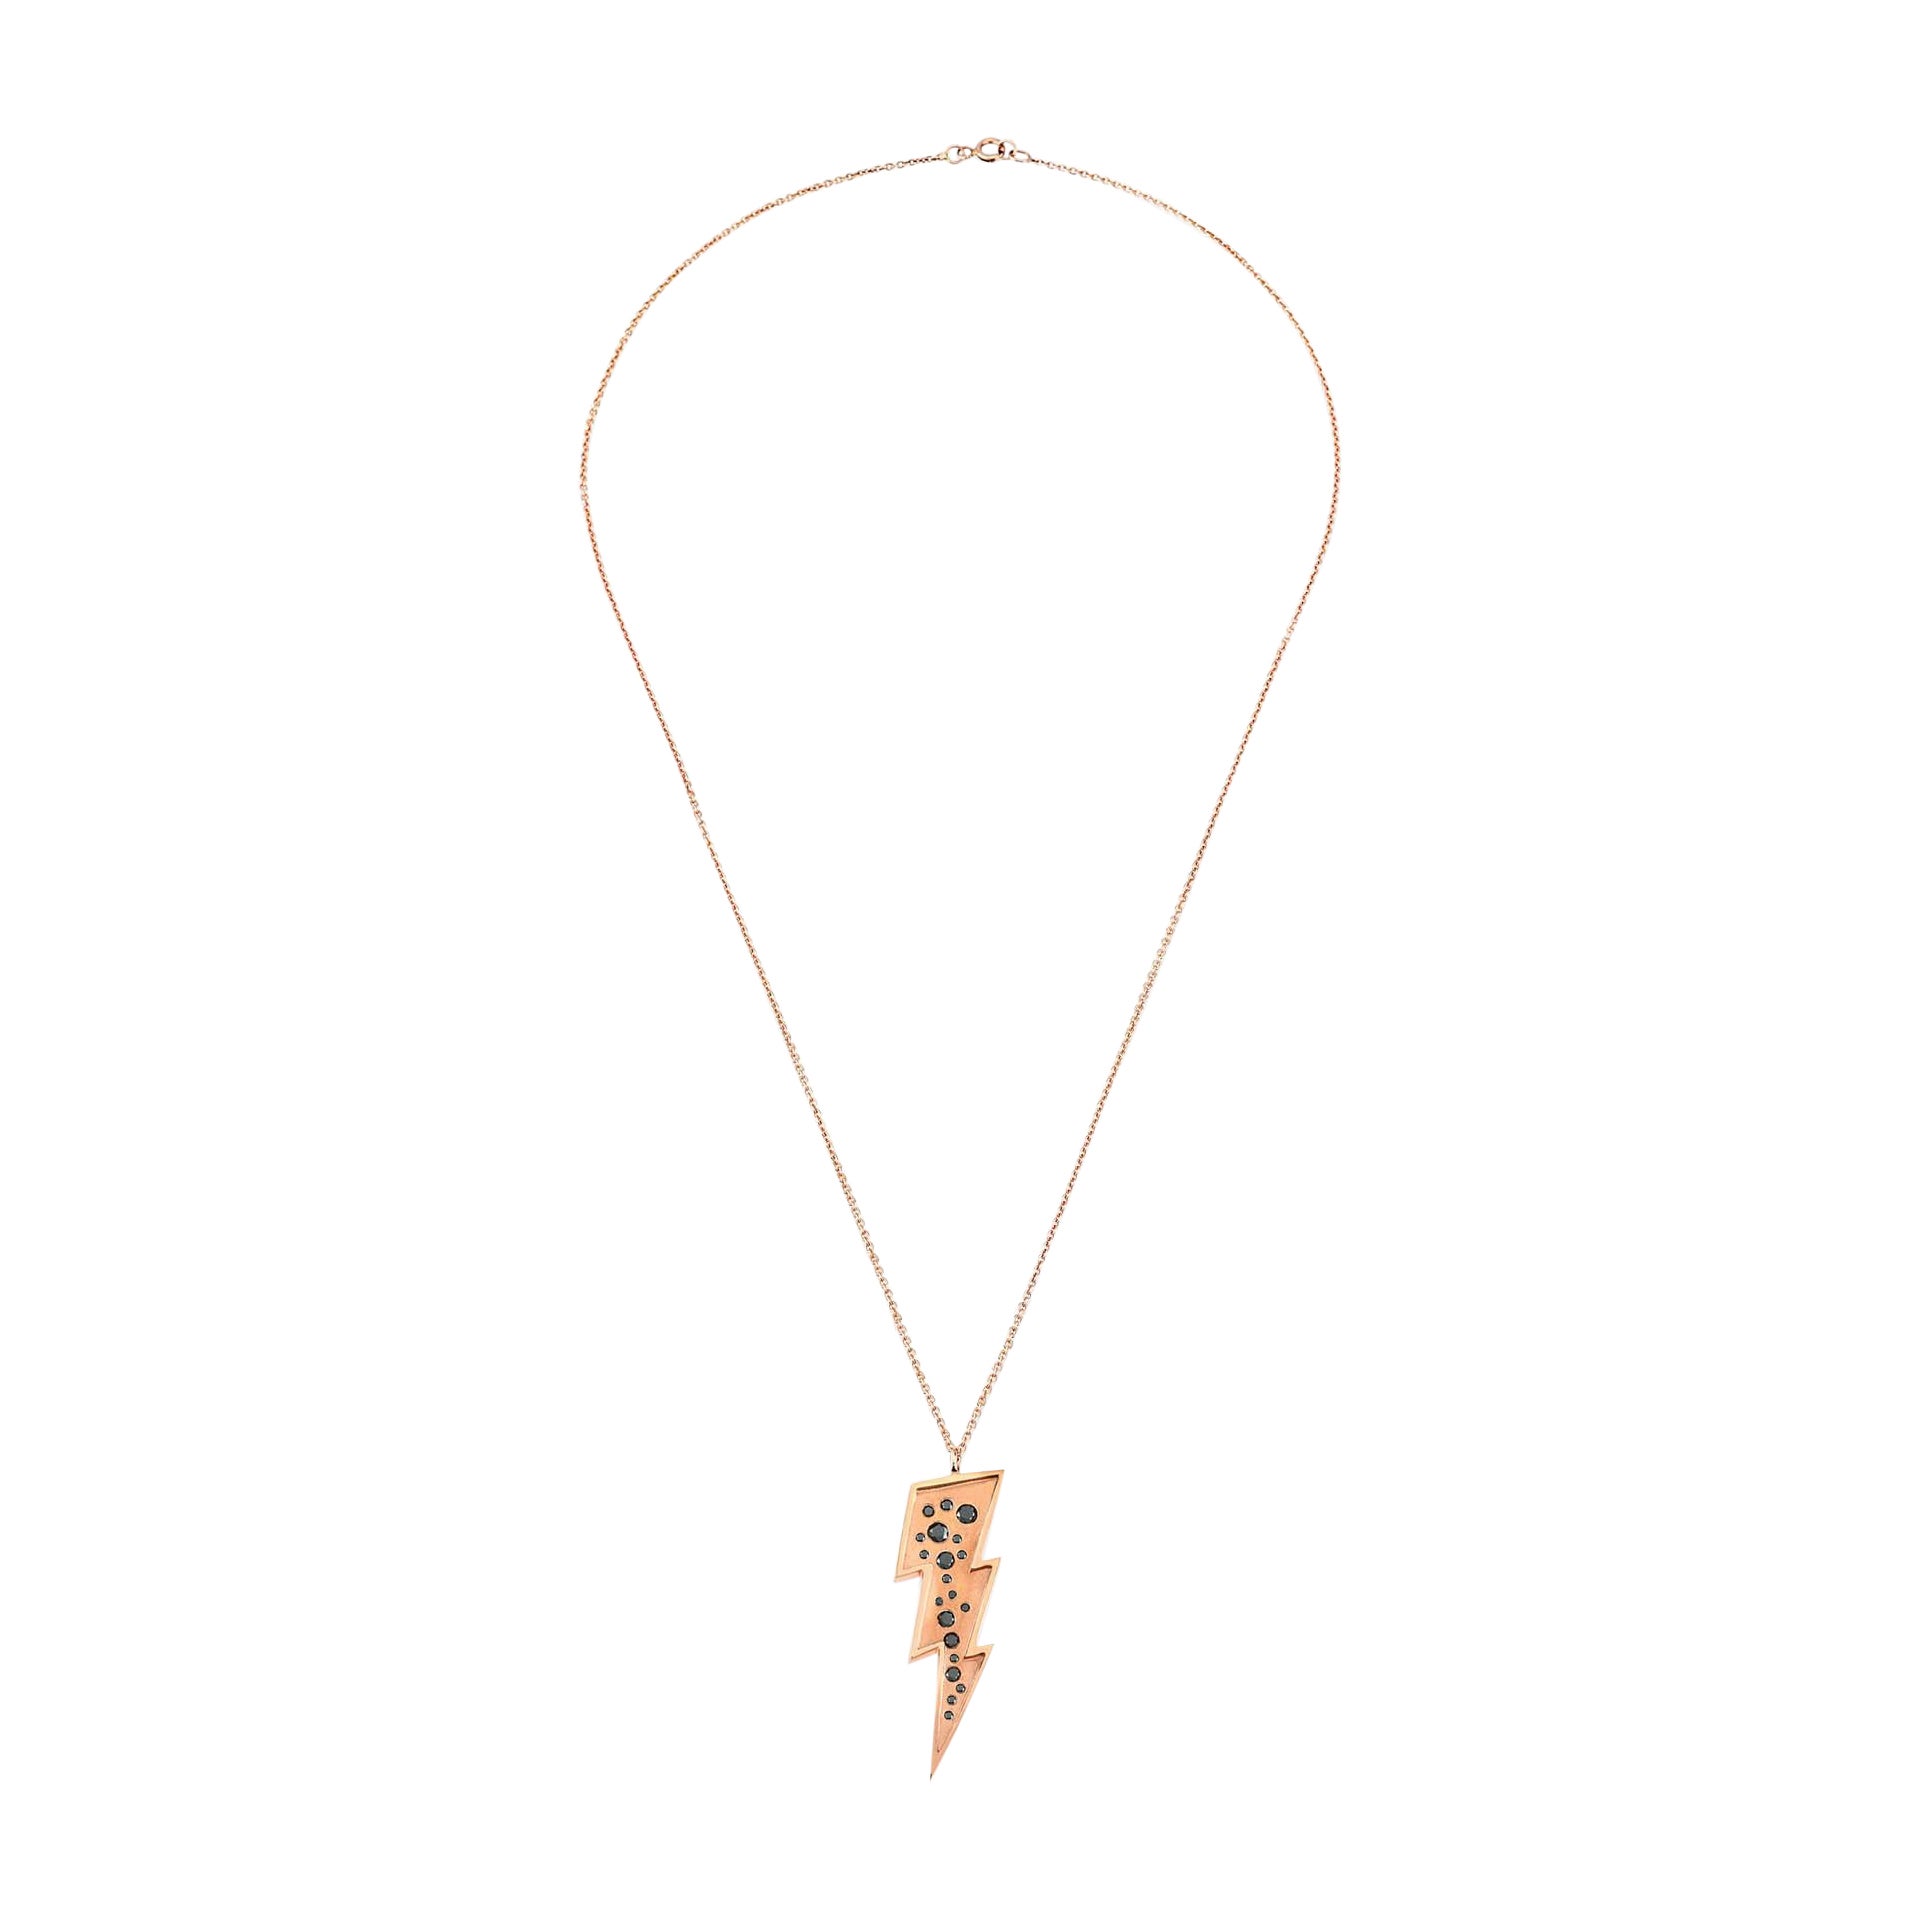 Black Diamond Lightning Necklace in 14K Rose Gold by Selda Jewellery For Sale